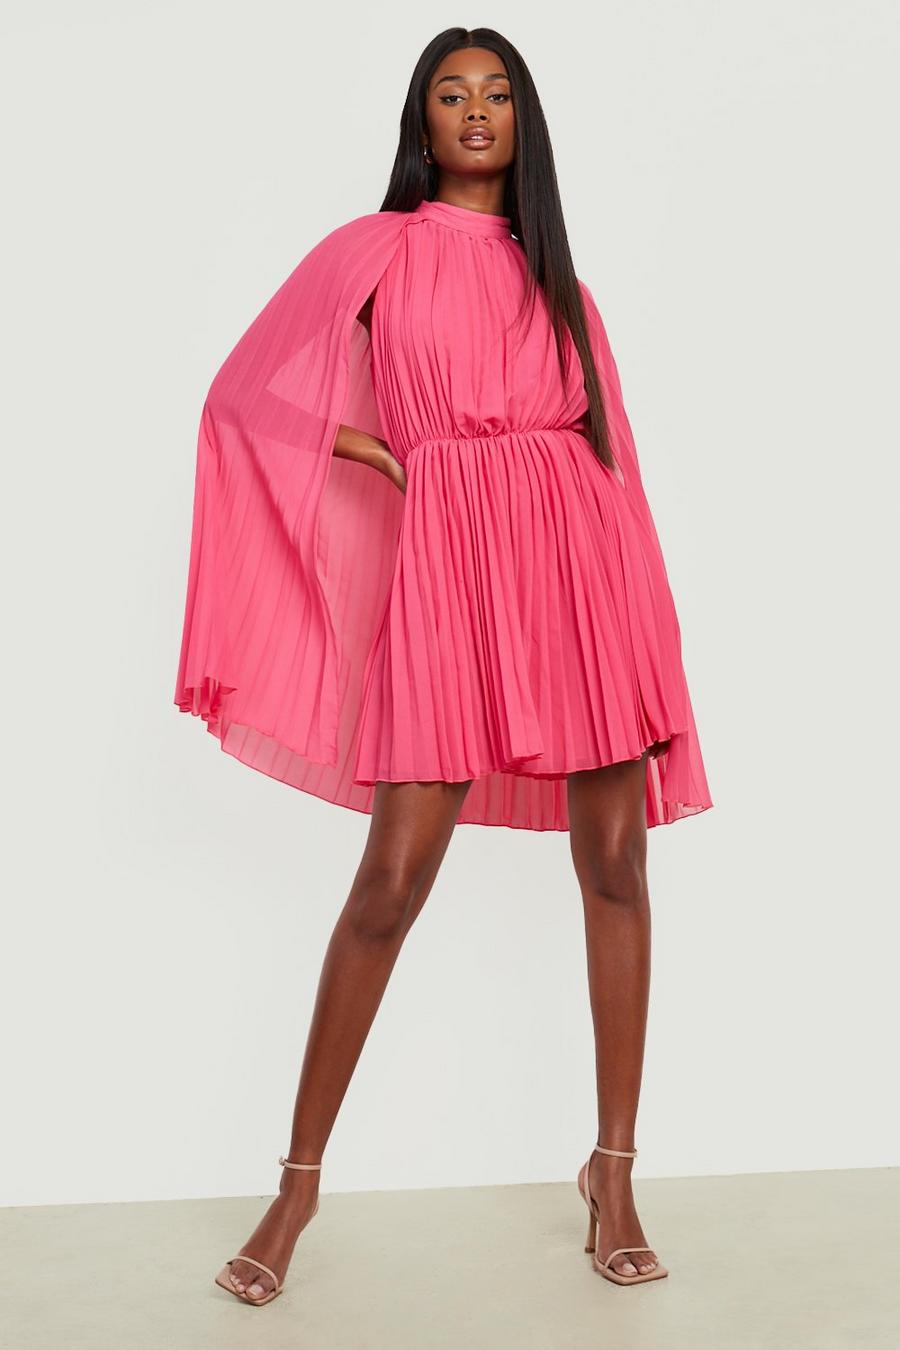 Hot pink Pleated Chiffon High Neck Skater Dress